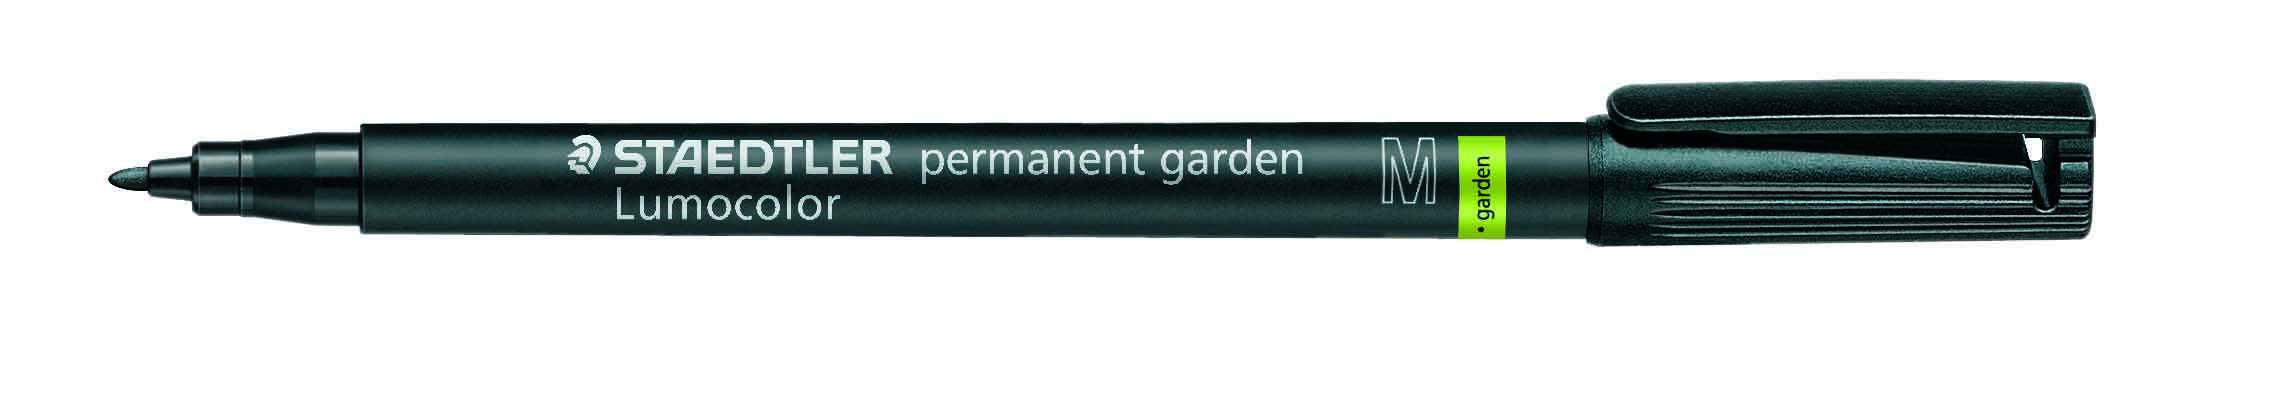 Marker Lumocolor Perm Garden 1,0mm sort, Staedtler 319 GM M-9